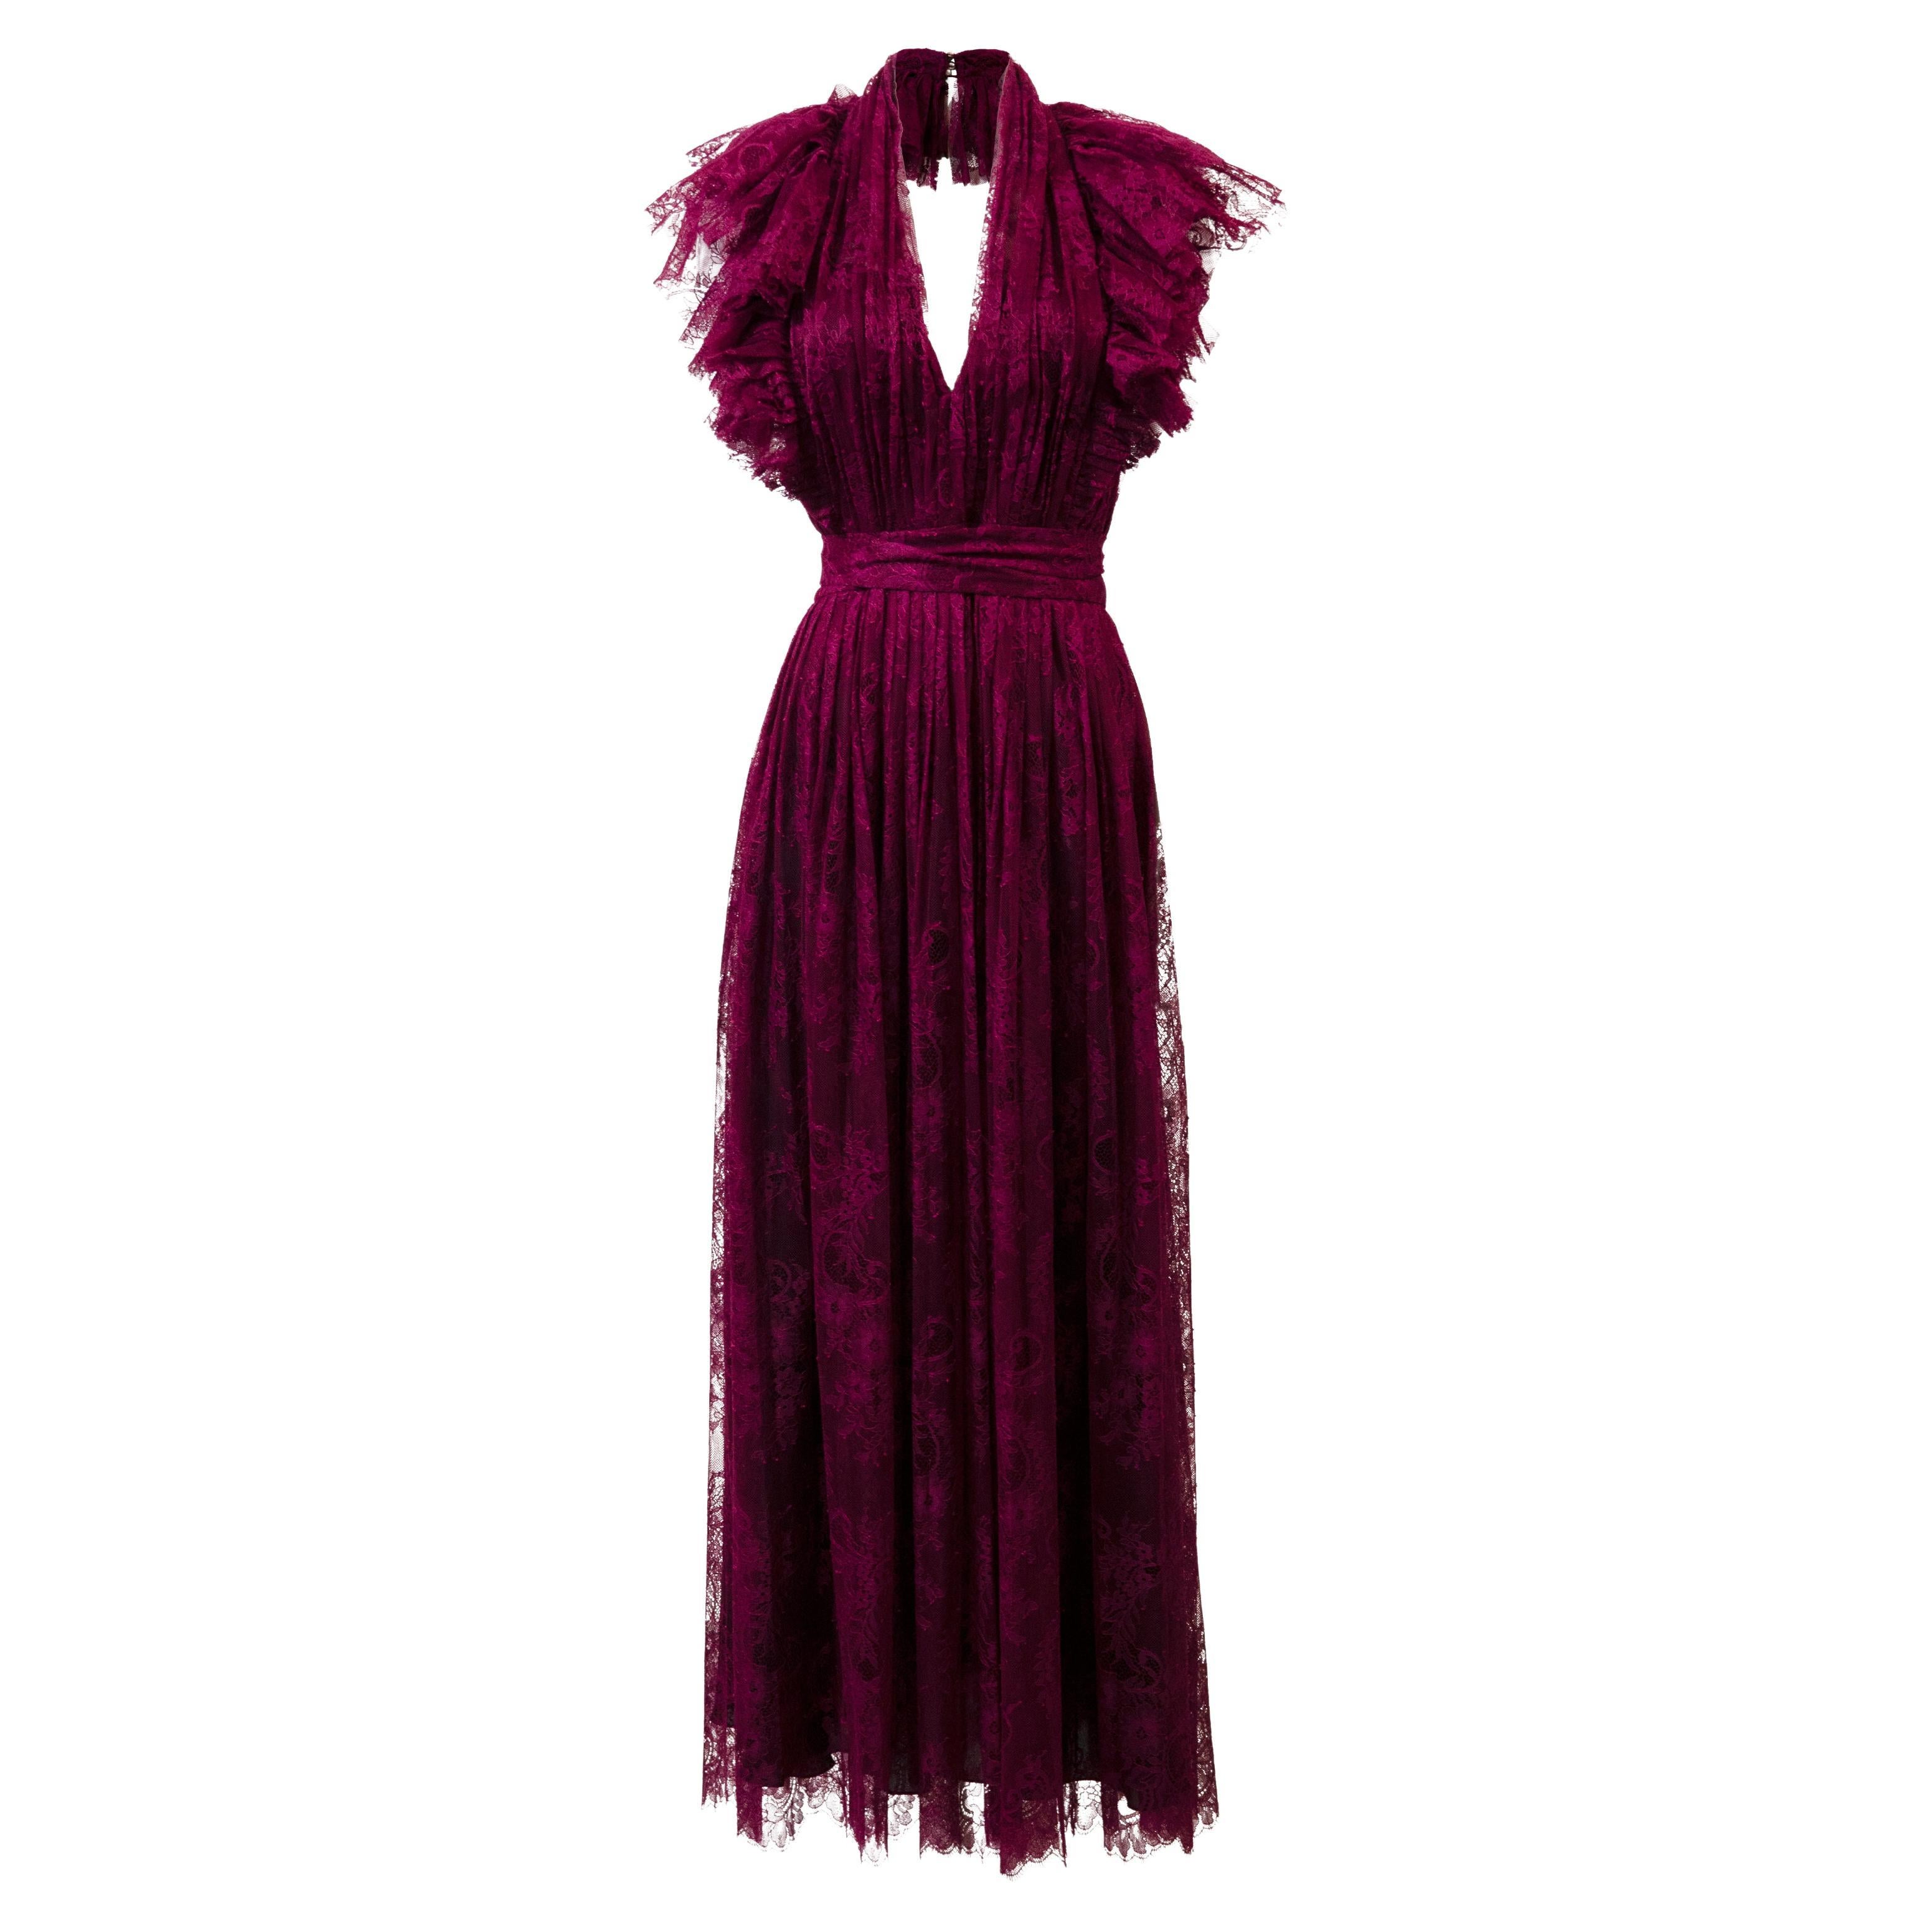 PHILOSOPHY DI LORENZO SERAFINI plum / burgundy elegant lace maxi dress